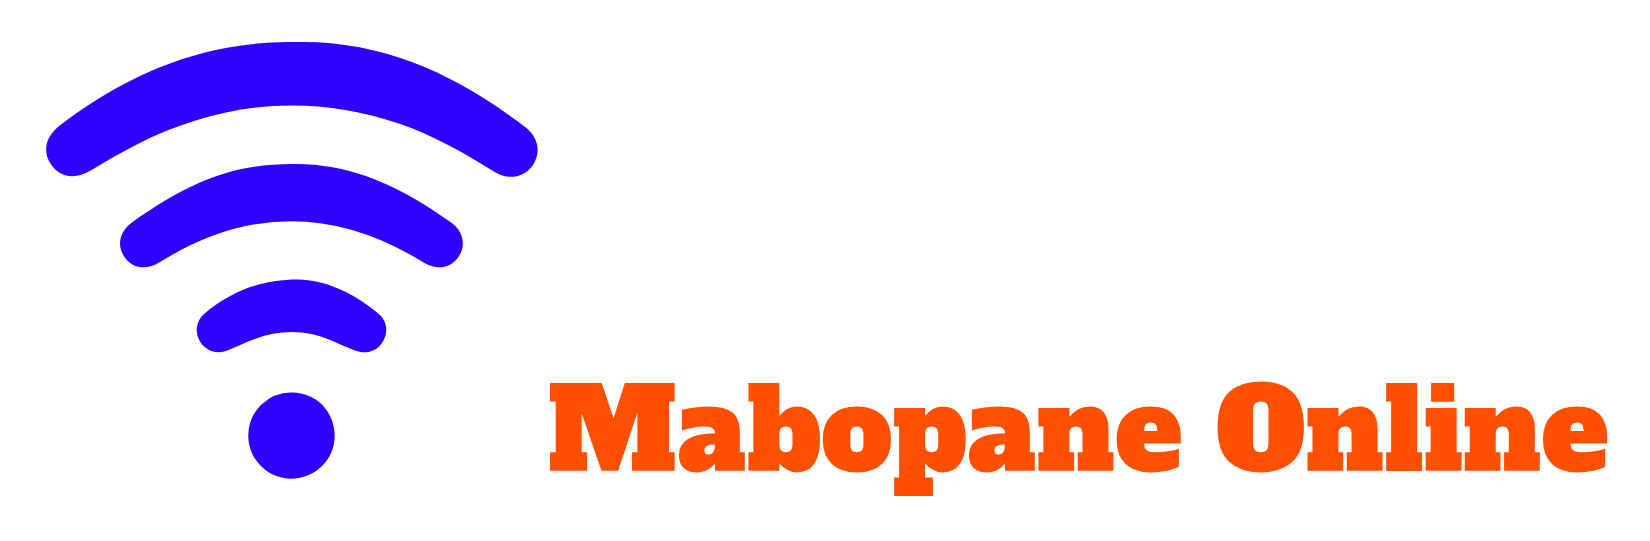 Mabopane Online